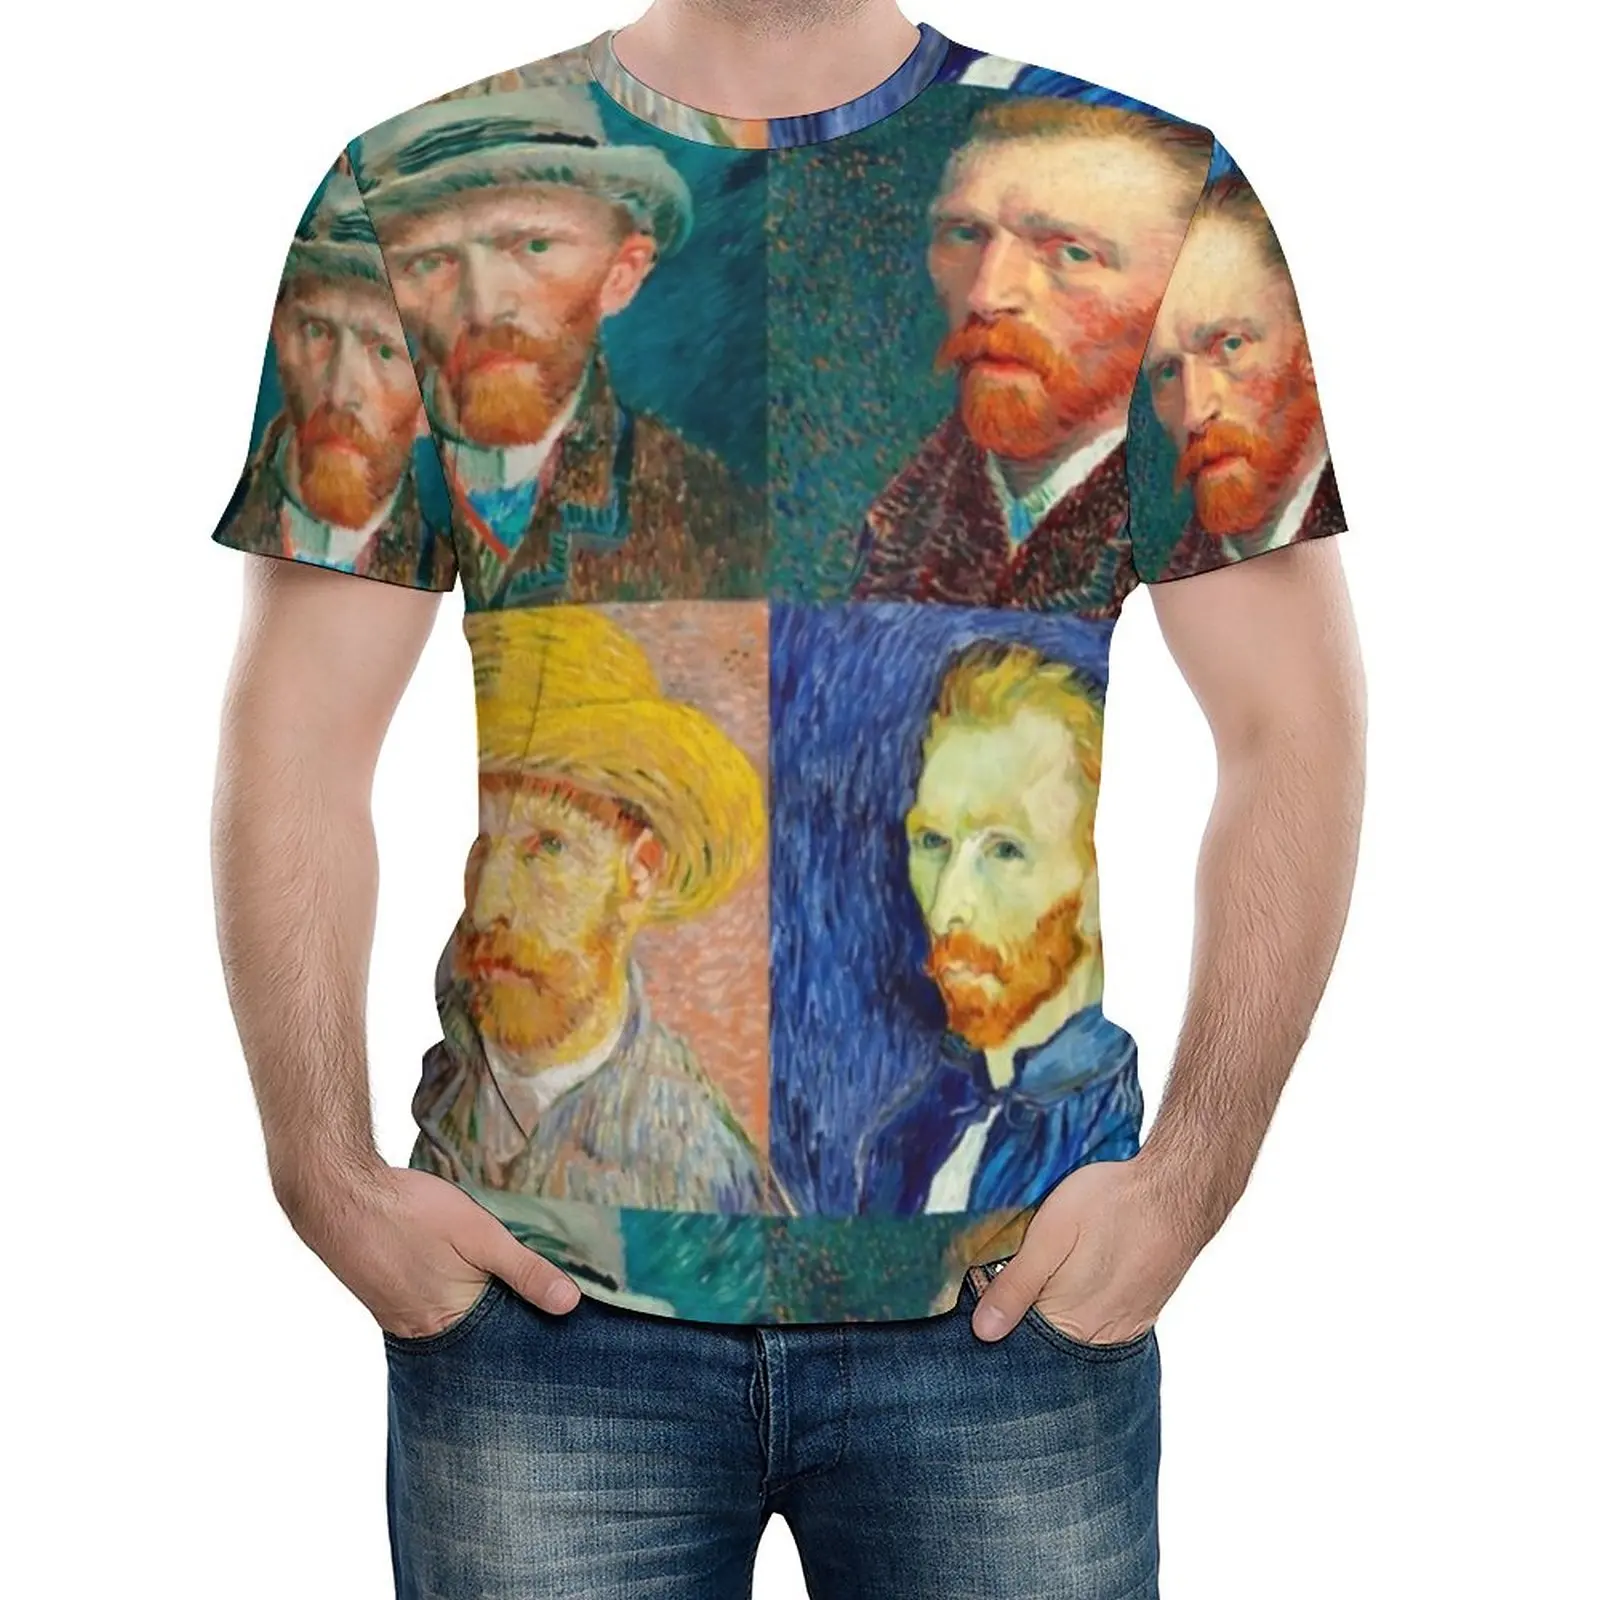 

Van Gogh T-Shirt Self-Portrait Collage Men Fashion T-Shirts Graphic Tee Shirt Short Sleeves Funny Big Size Tops Birthday Present